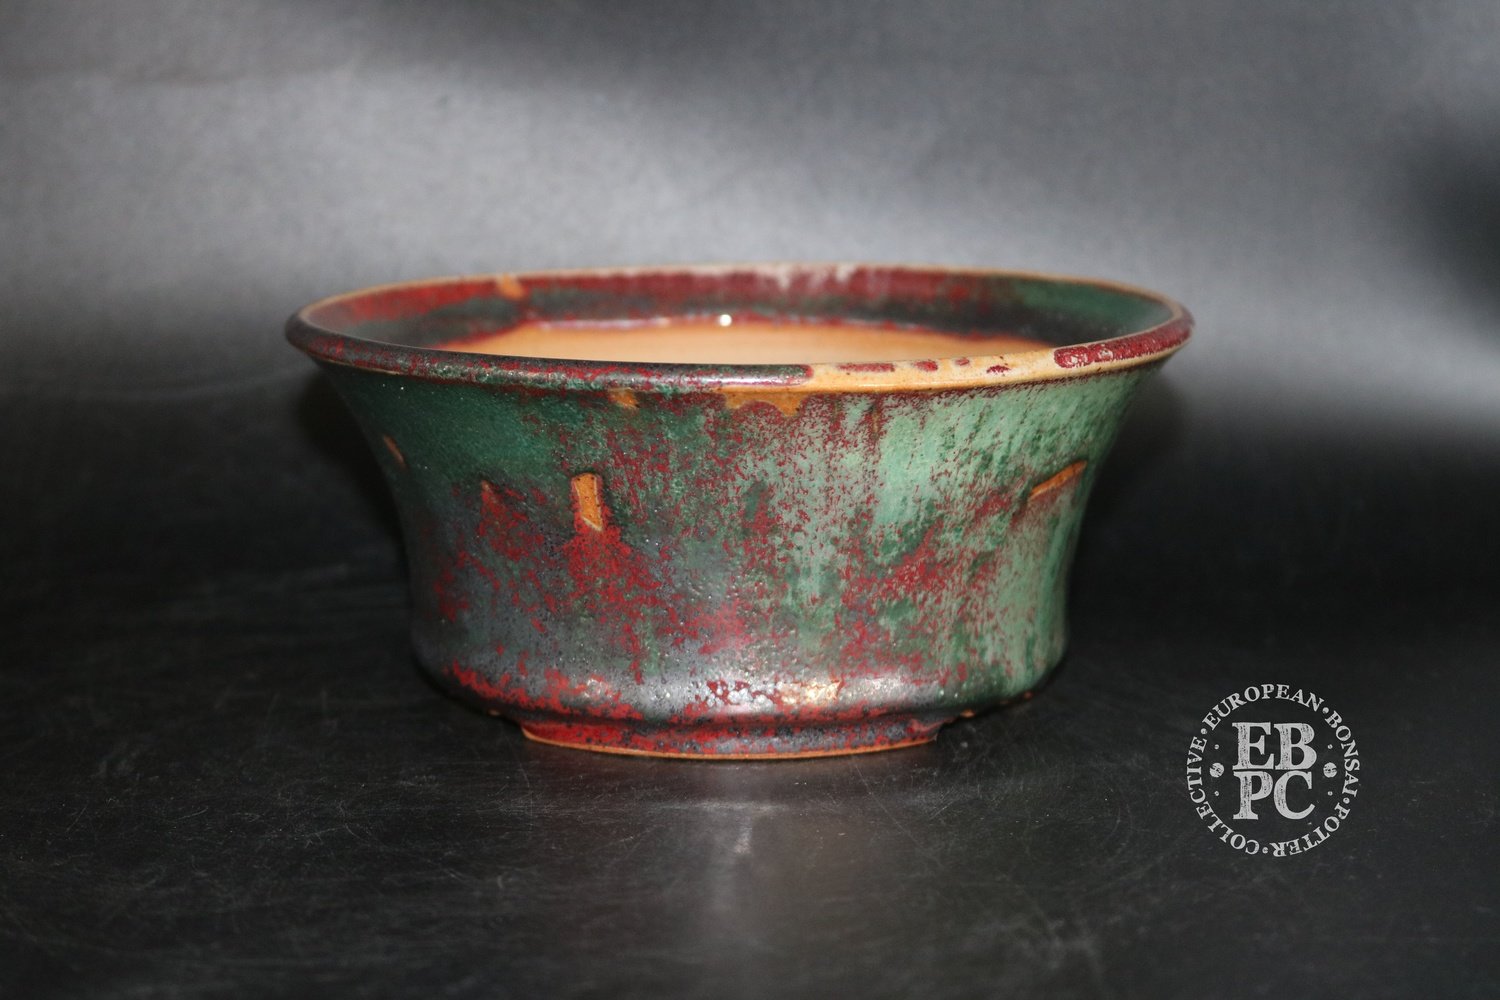 SOLD - Amdouni Bonsai Pots - 18cm; Glazed; Round; 'Sang de Boeuf' glaze; Green; Blood Red; Sami Amdouni